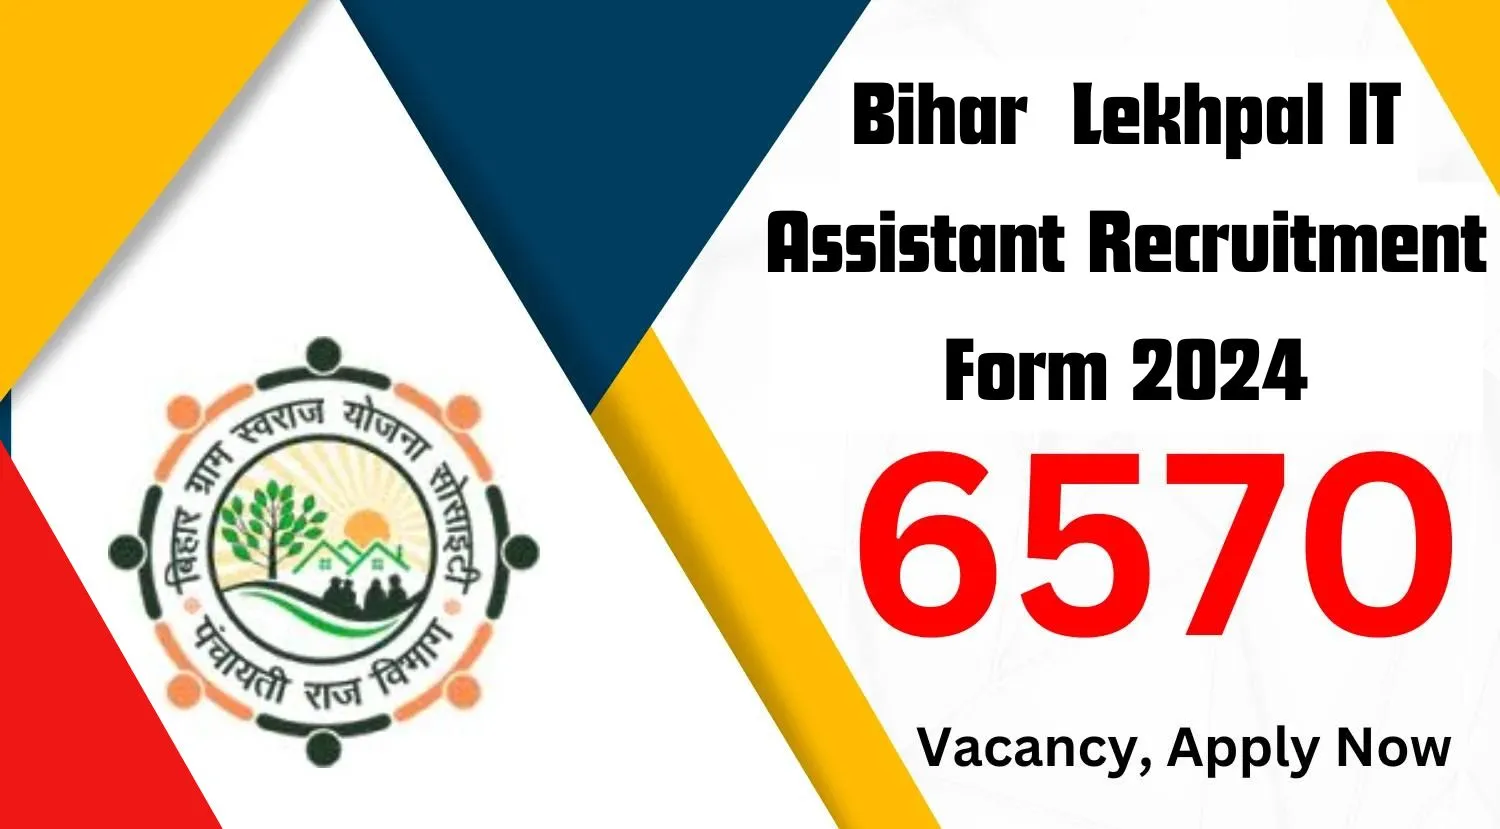 Bihar Lekhpal IT Assistant Recruitment Form 2024